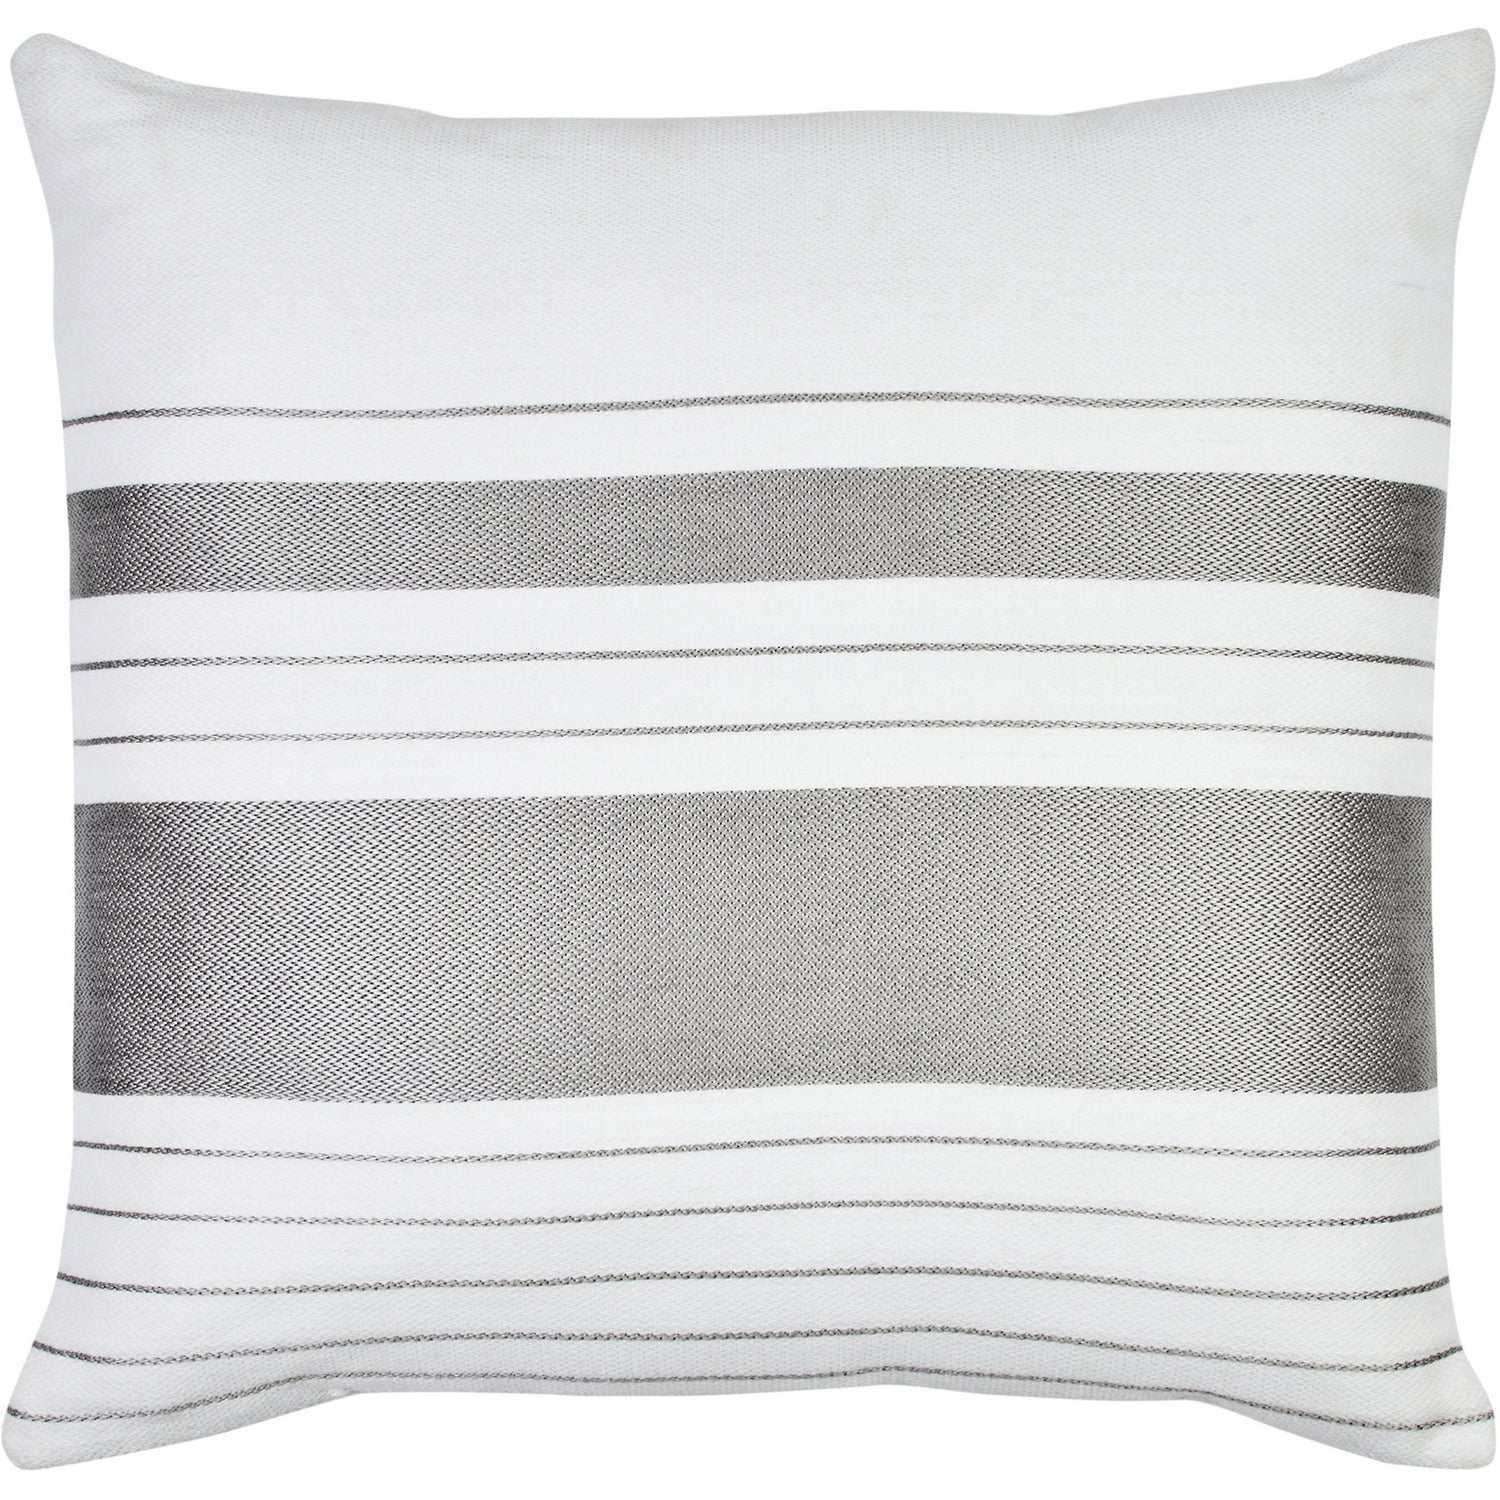 Renwil - PWFLX1026 - Pillow - Strathmere - Cool Grey/ White Stripes